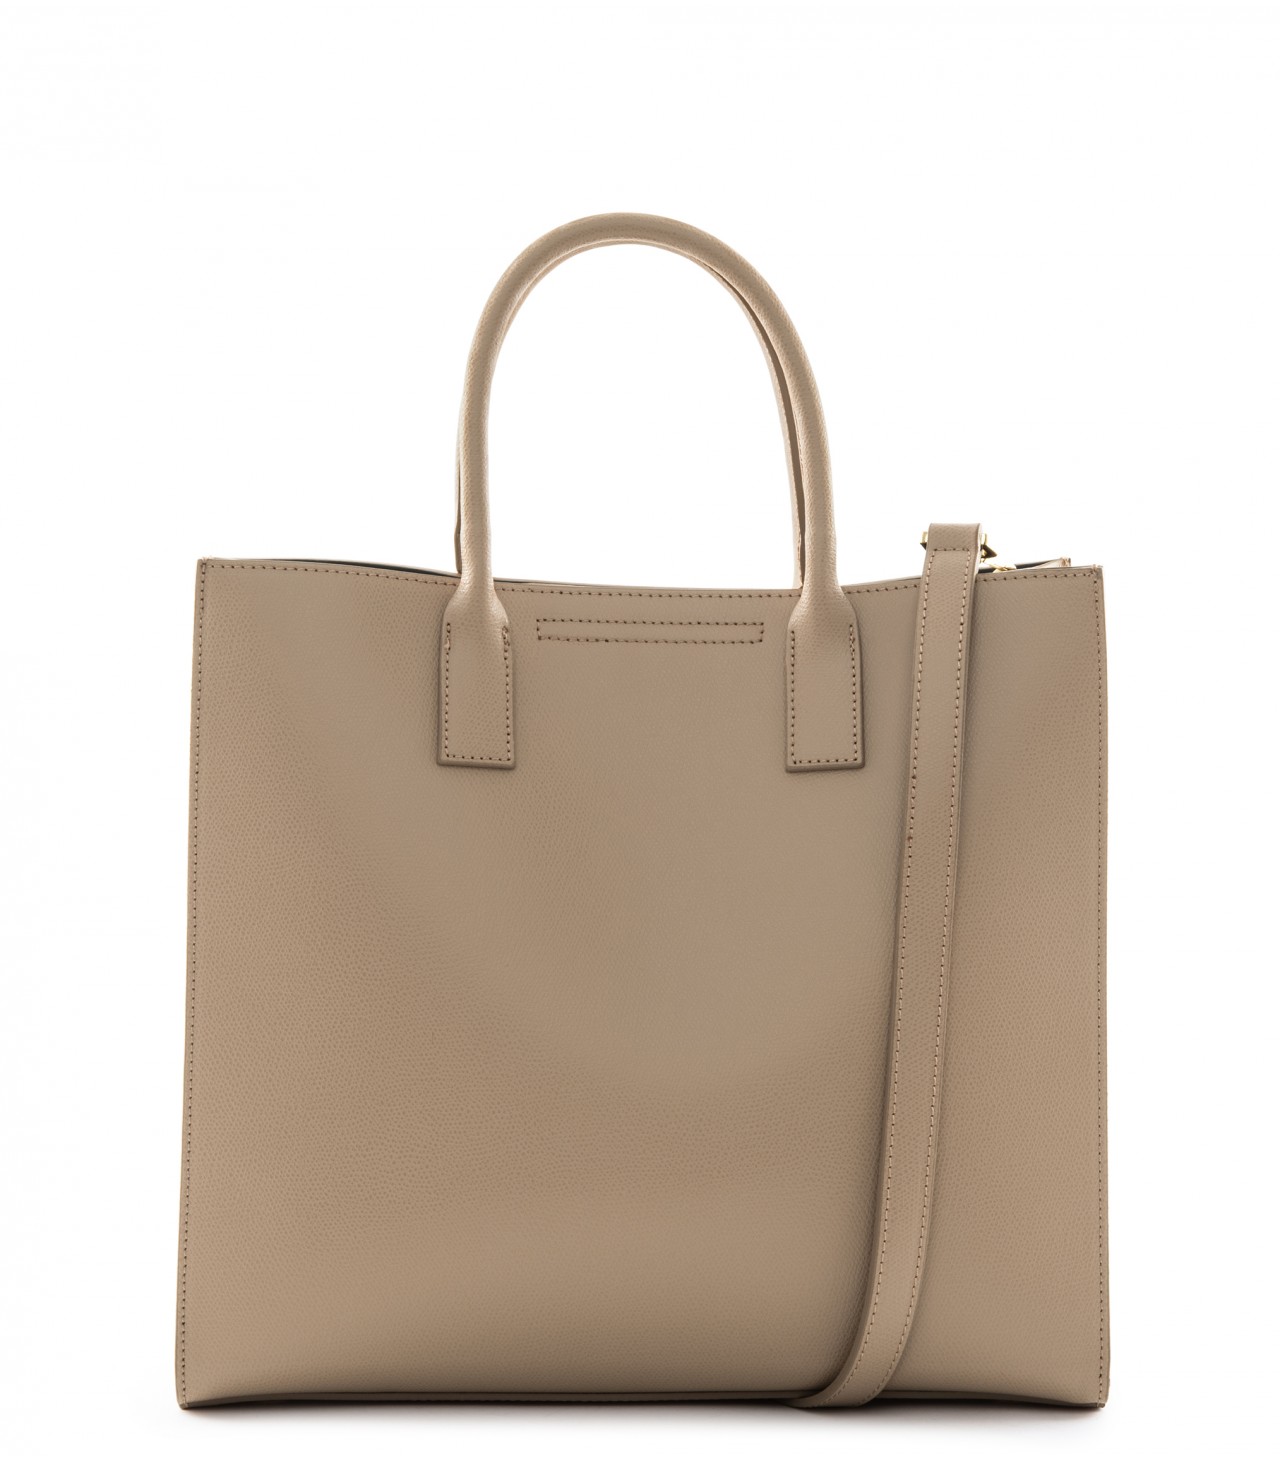 Grained Leather handbag - Camelia Roma